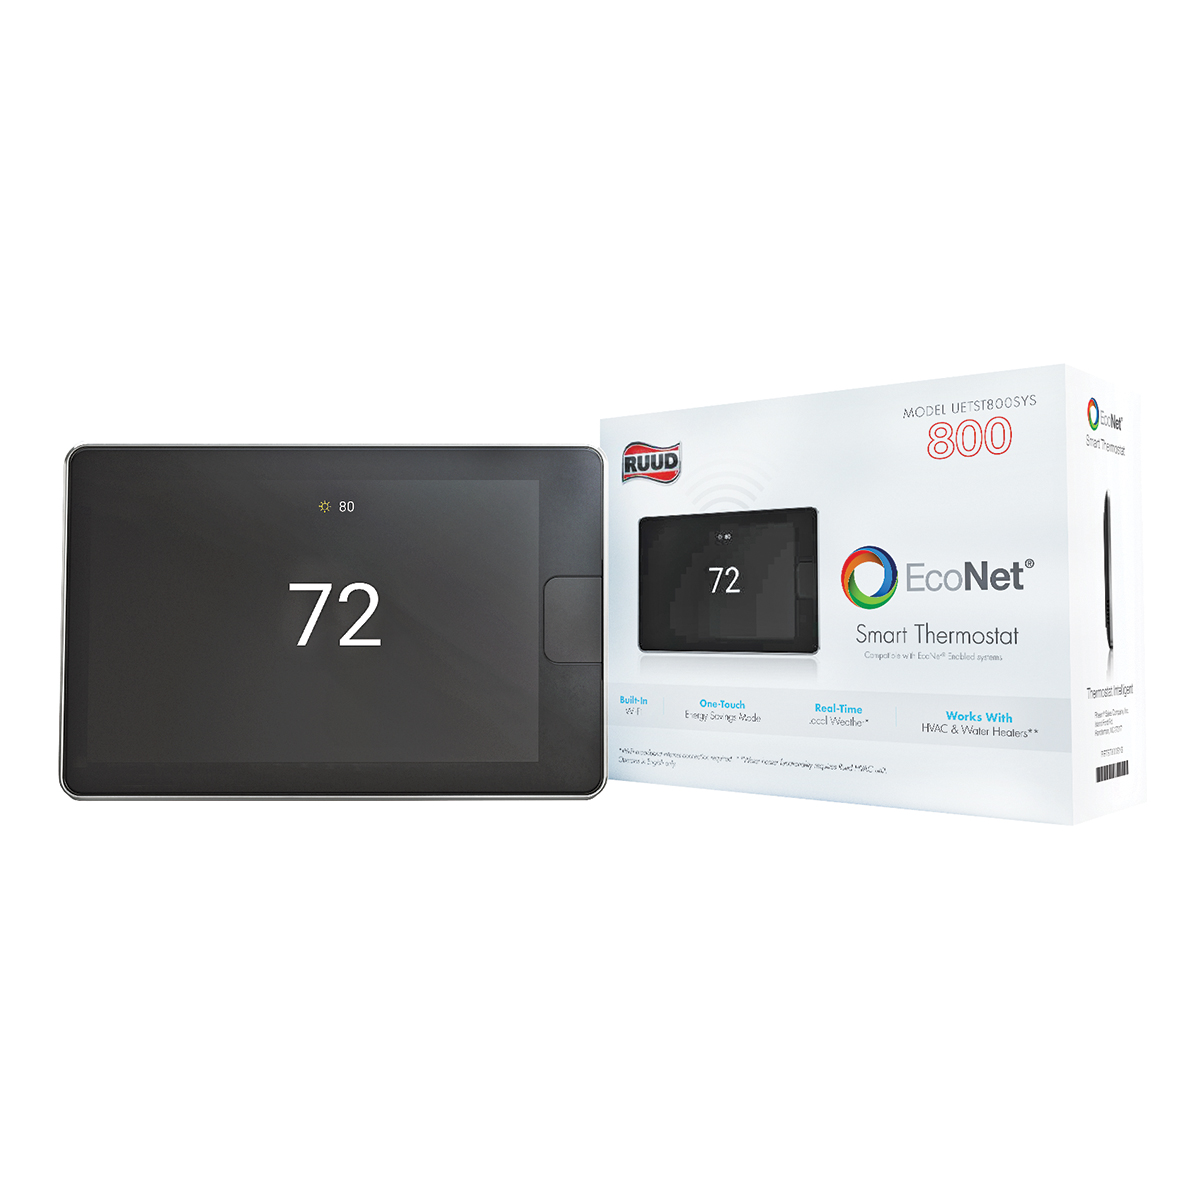 EcoNet 800 Series Smart Thermostat